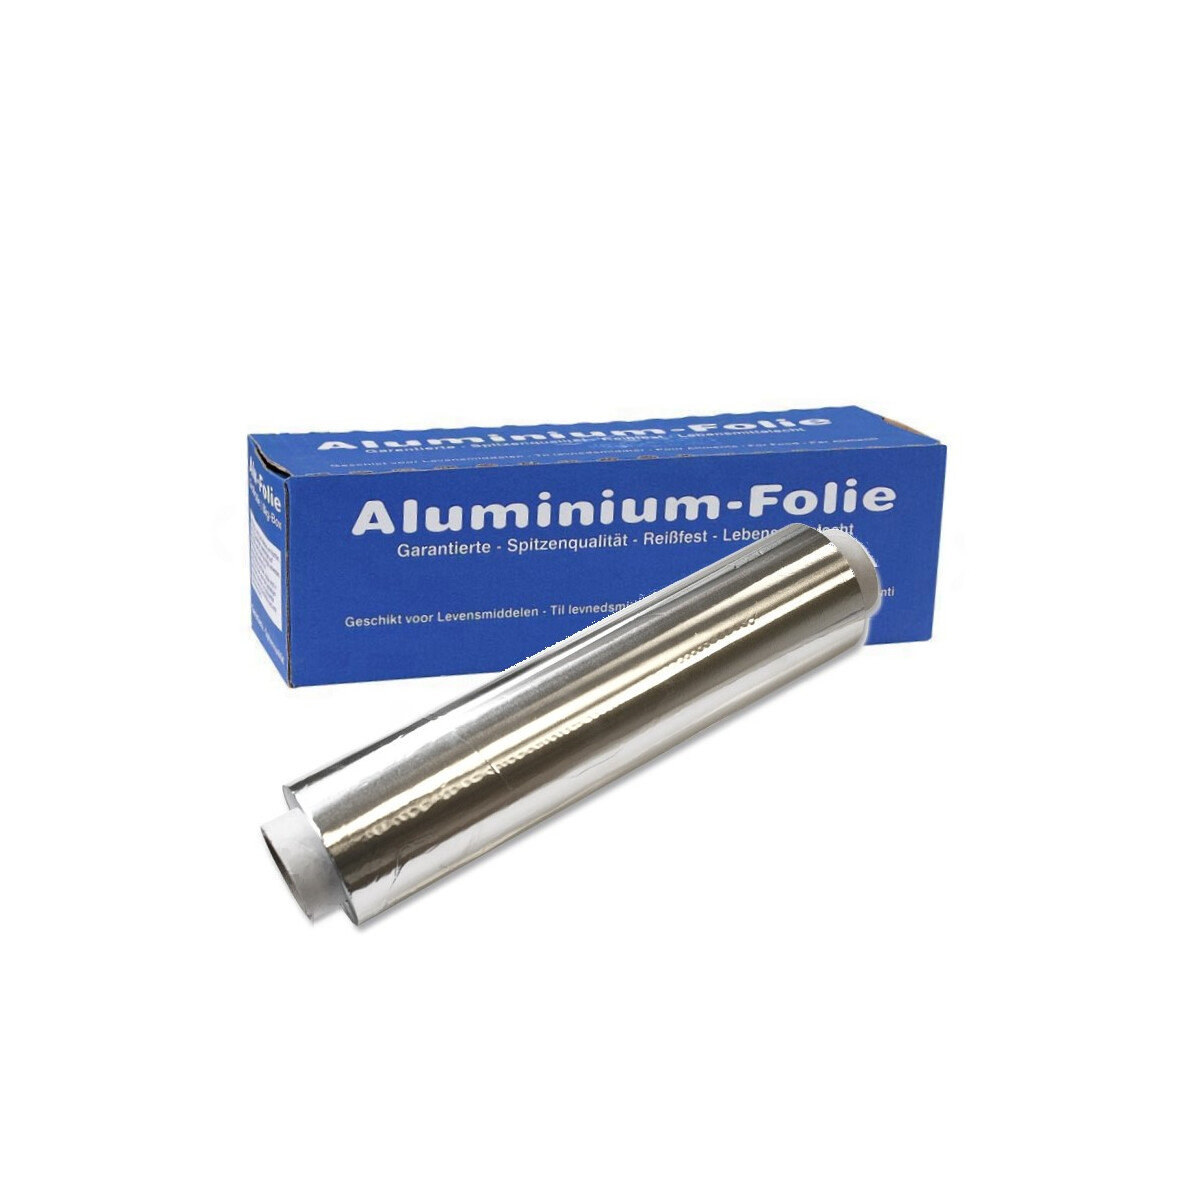 EMAGEREN 2 StÜcke Aluminium Folie Aufkleber 40 x 200cm Alufolie